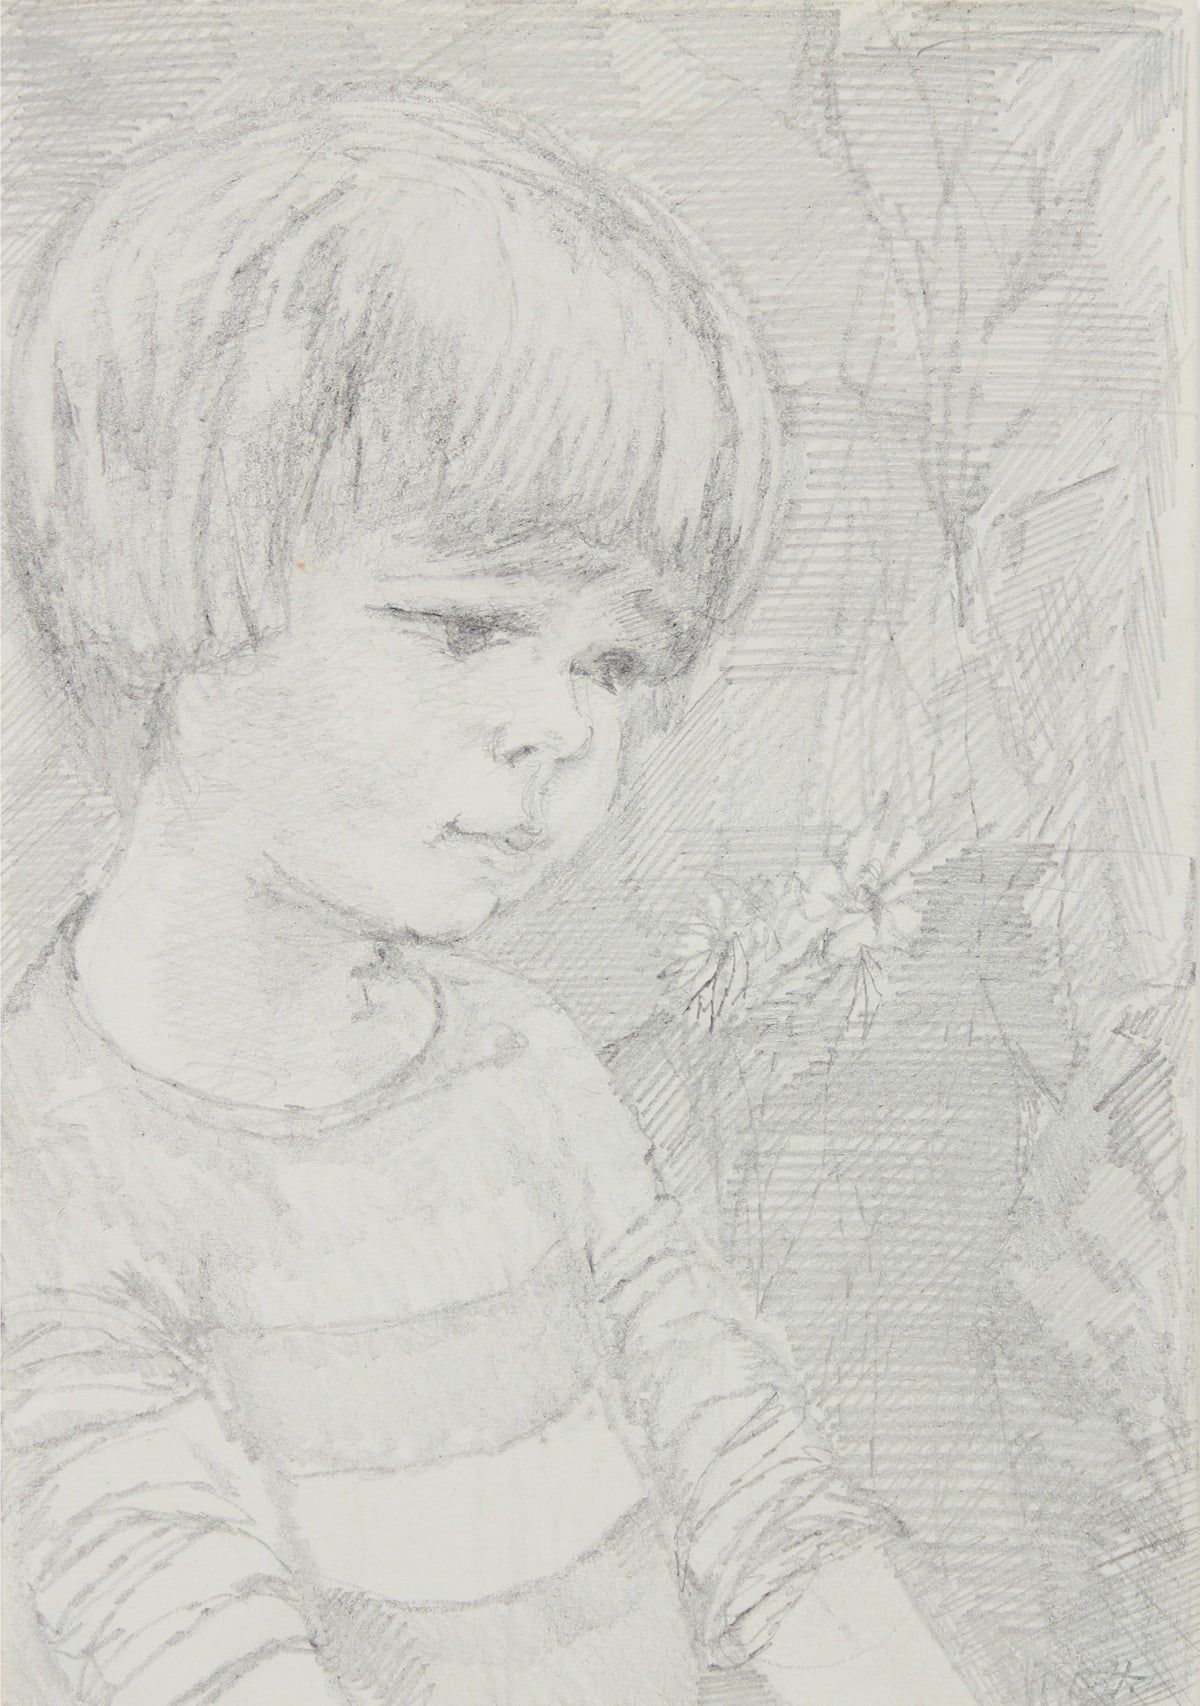 Monochrome Drawing of a Boy &lt;br&gt;1940-60s Graphite &lt;br&gt;&lt;br&gt;#B0909